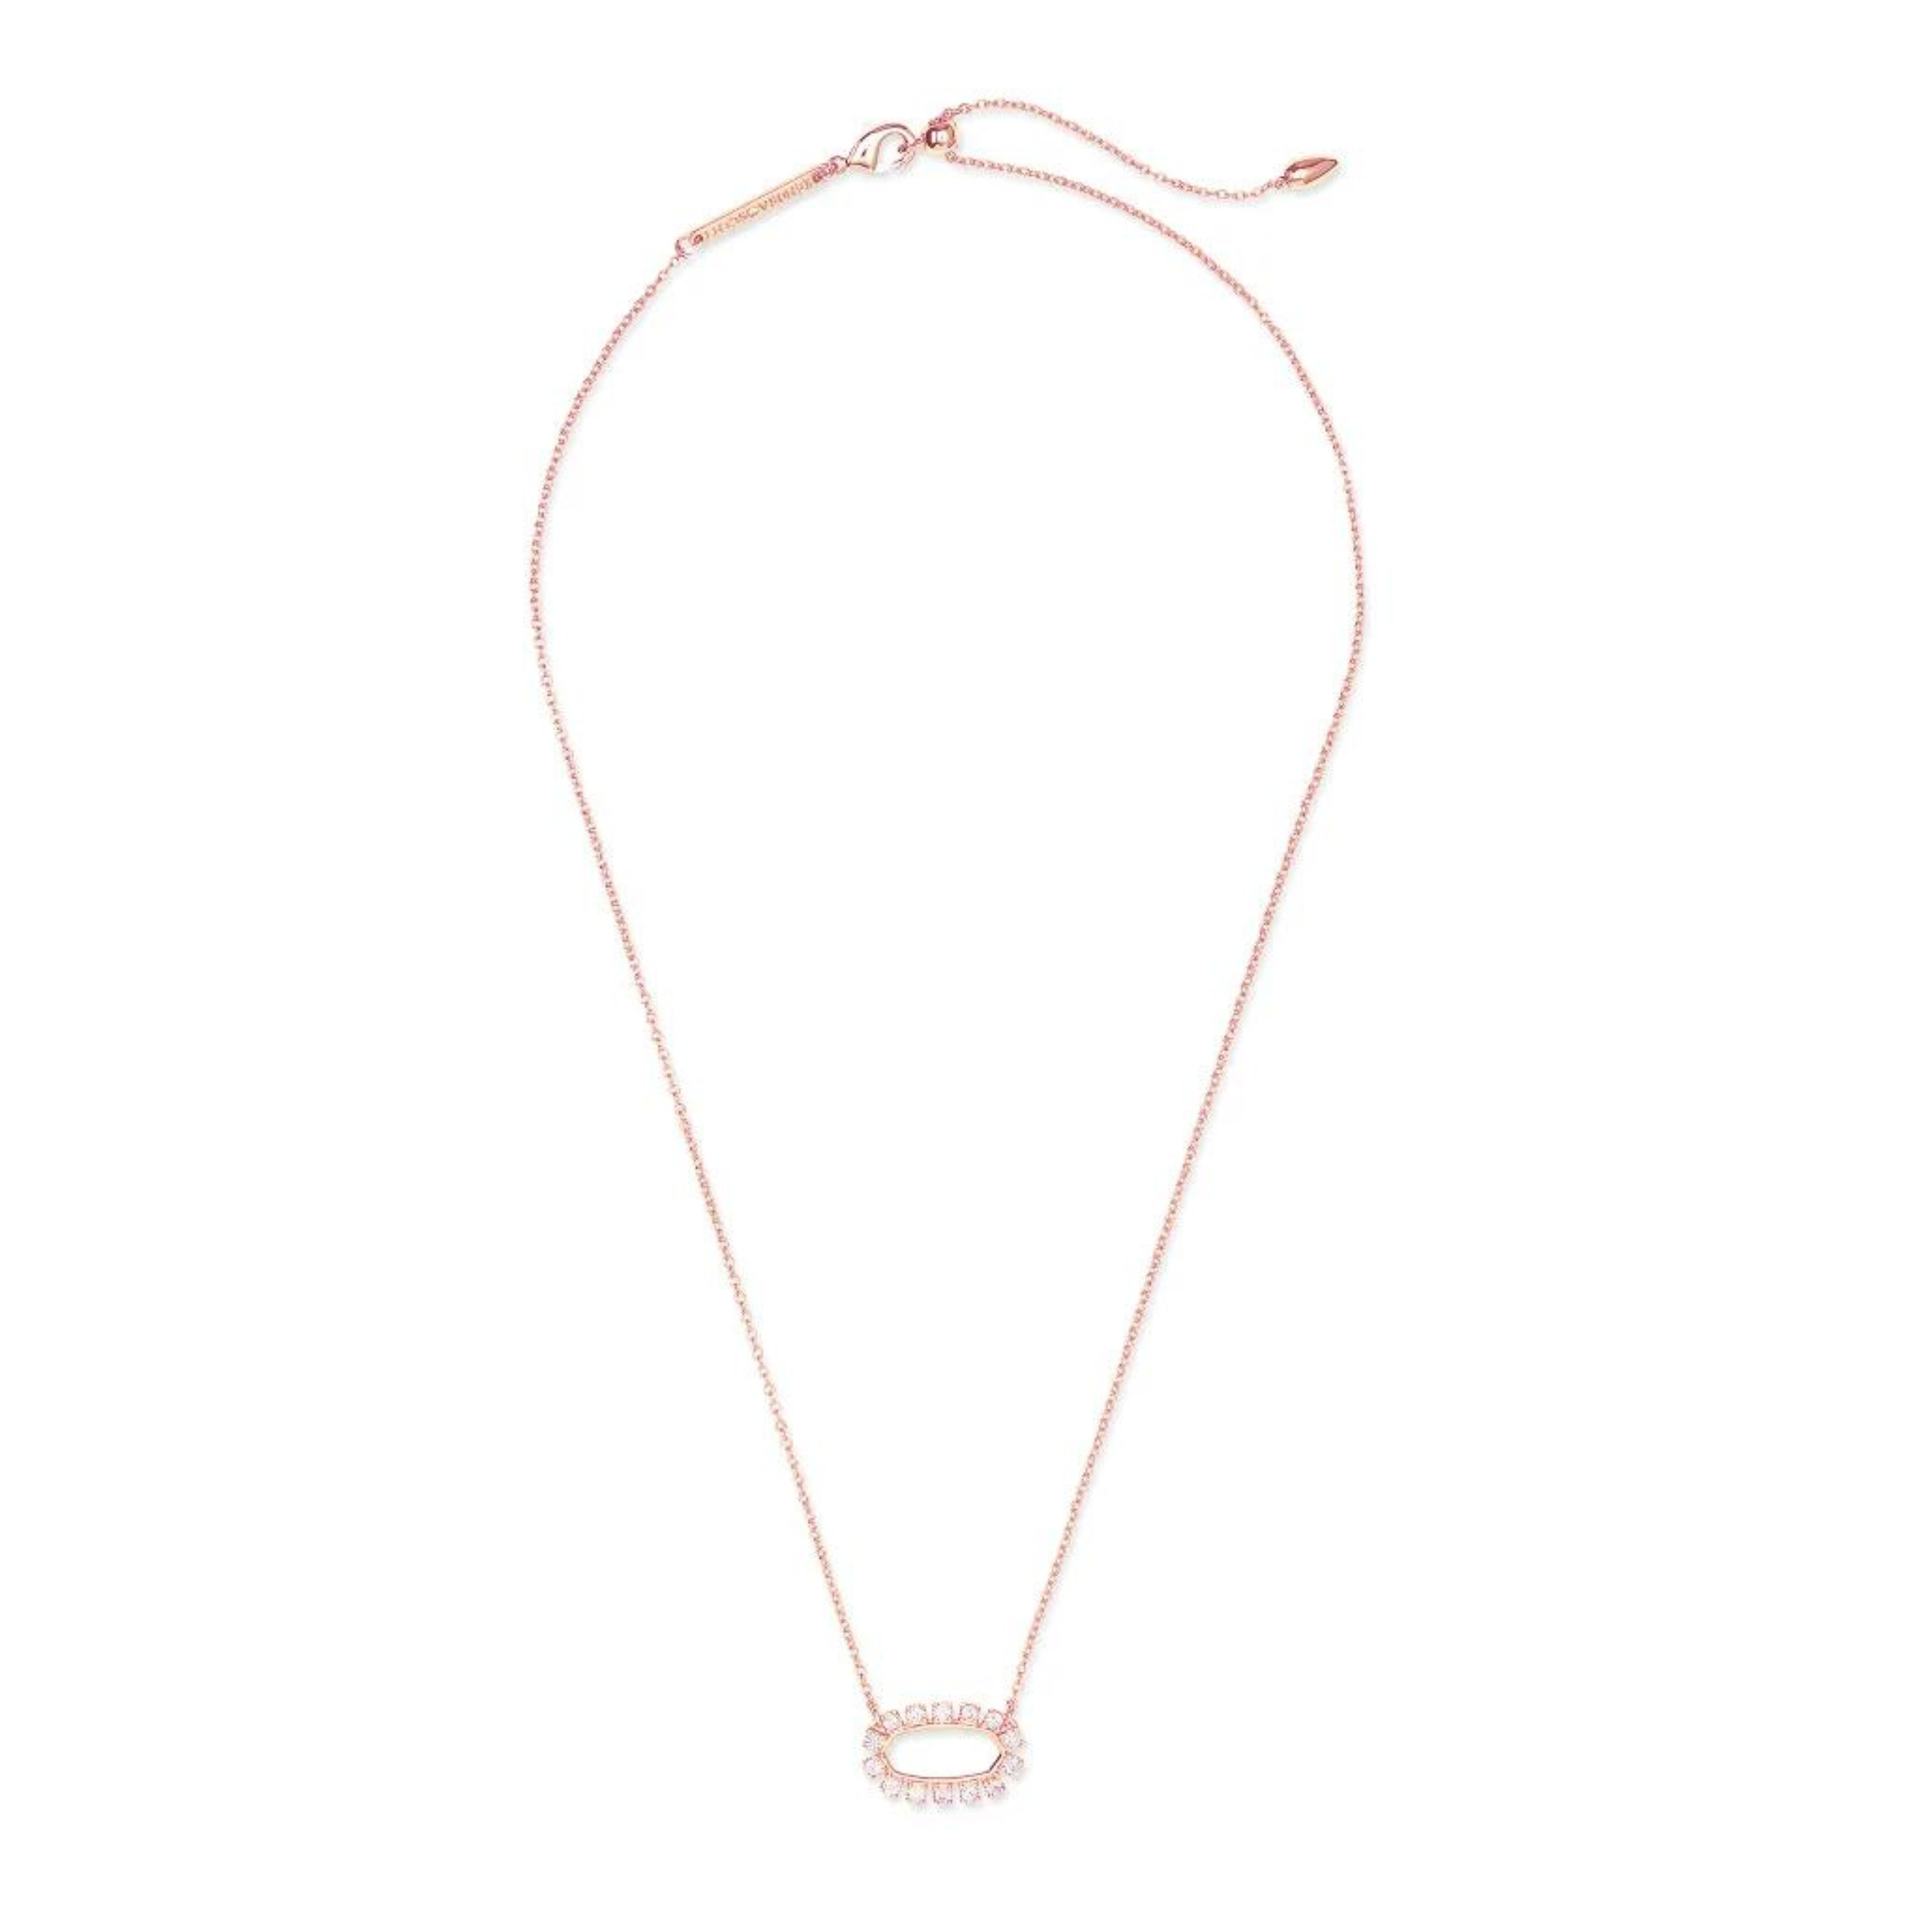 Kendra Scott | Elisa Open Frame Crystal Pendant Necklace in Rose Gold - Giddy Up Glamour Boutique